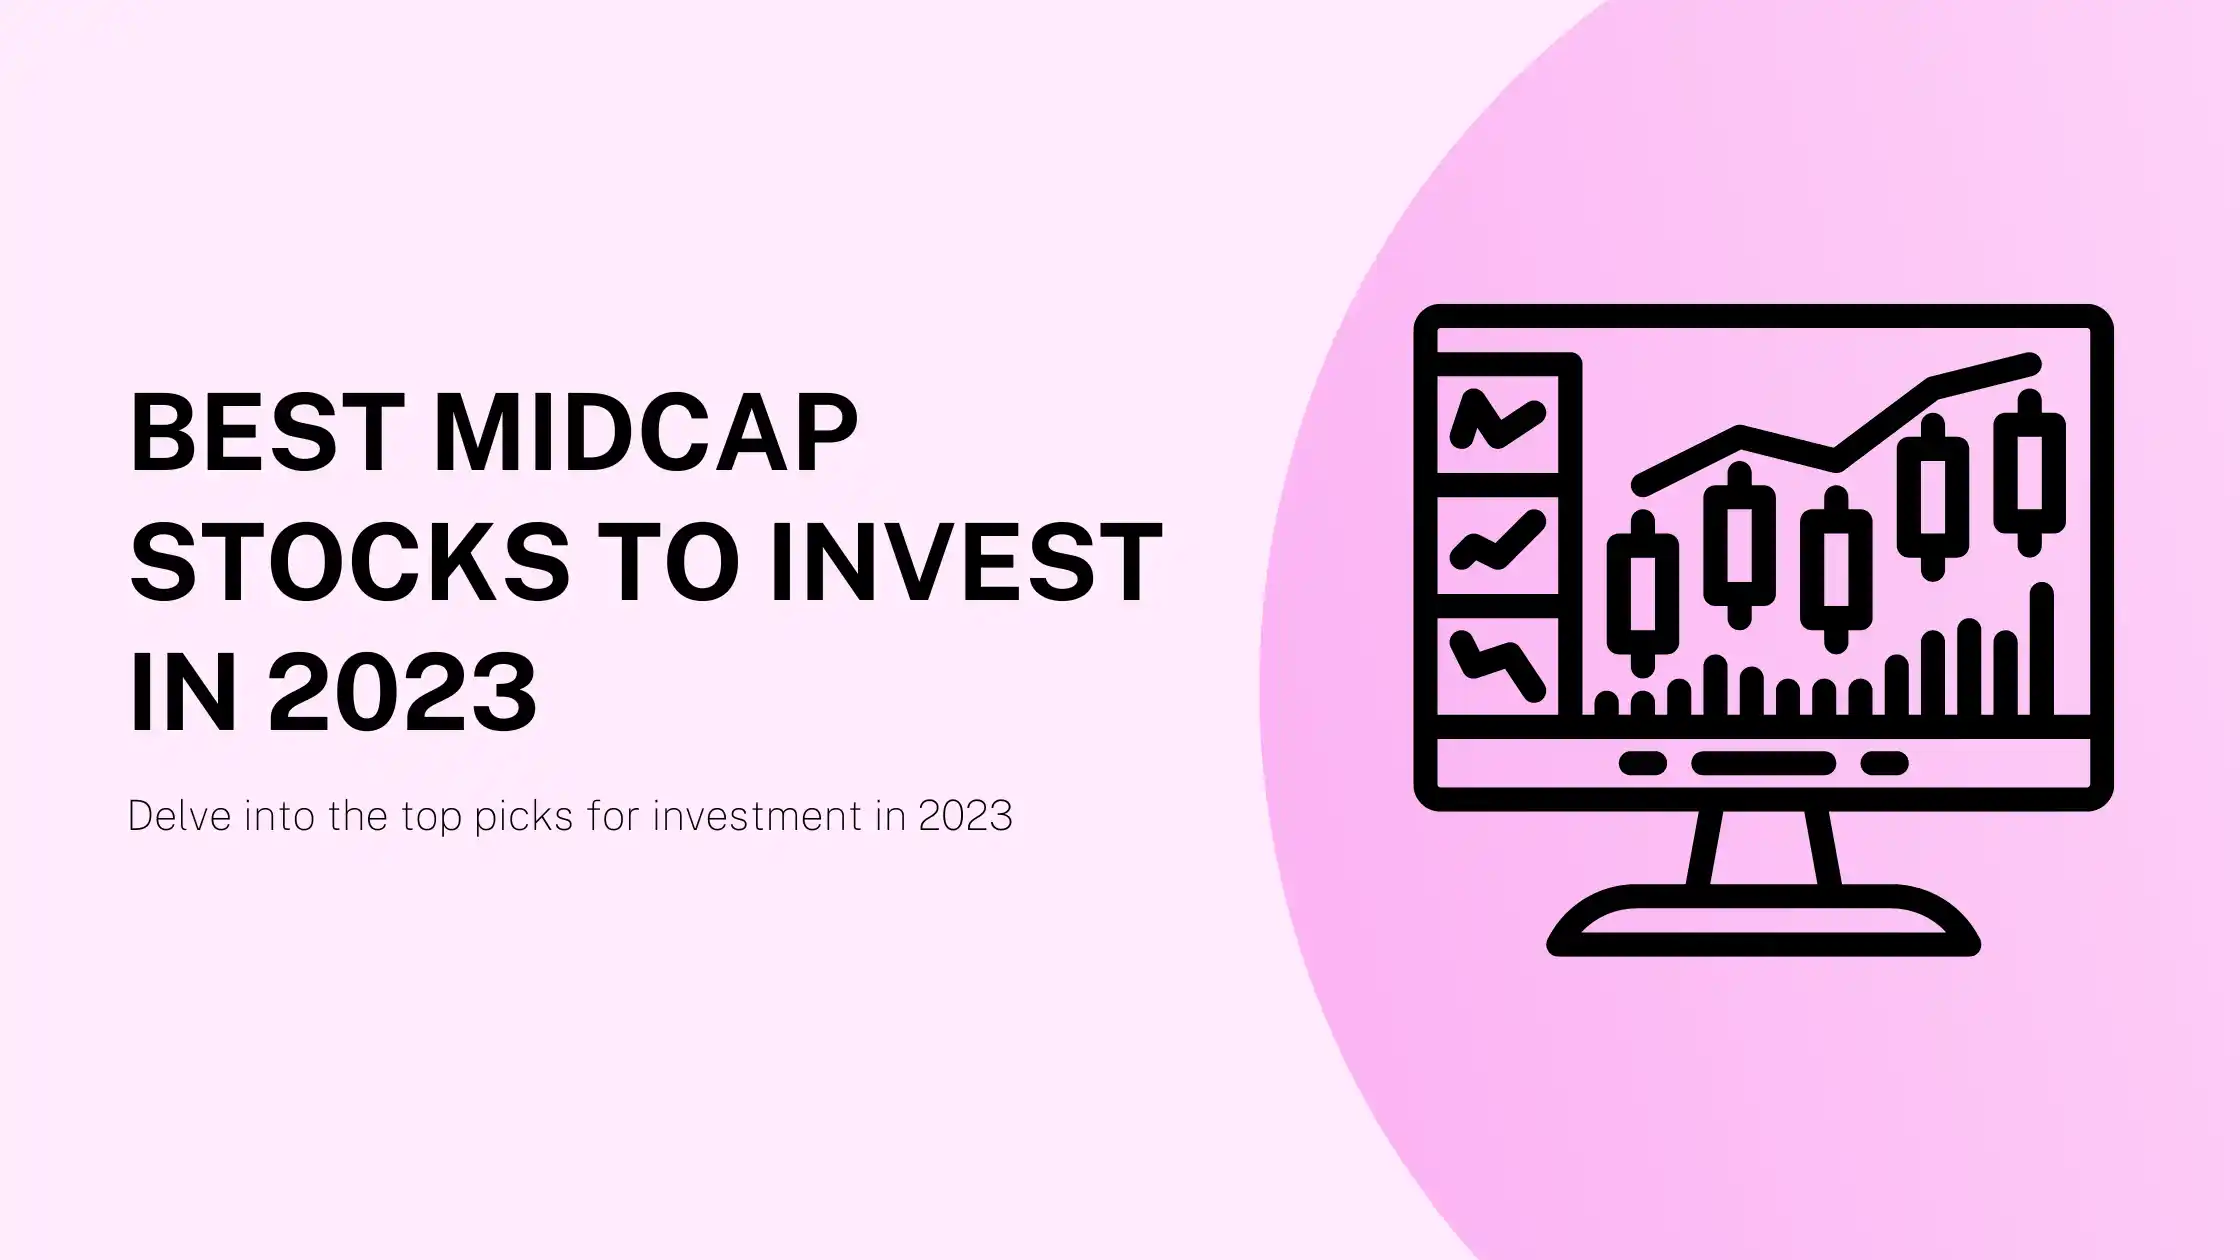 Best midcap stocks to invest in 2023: Top Picks